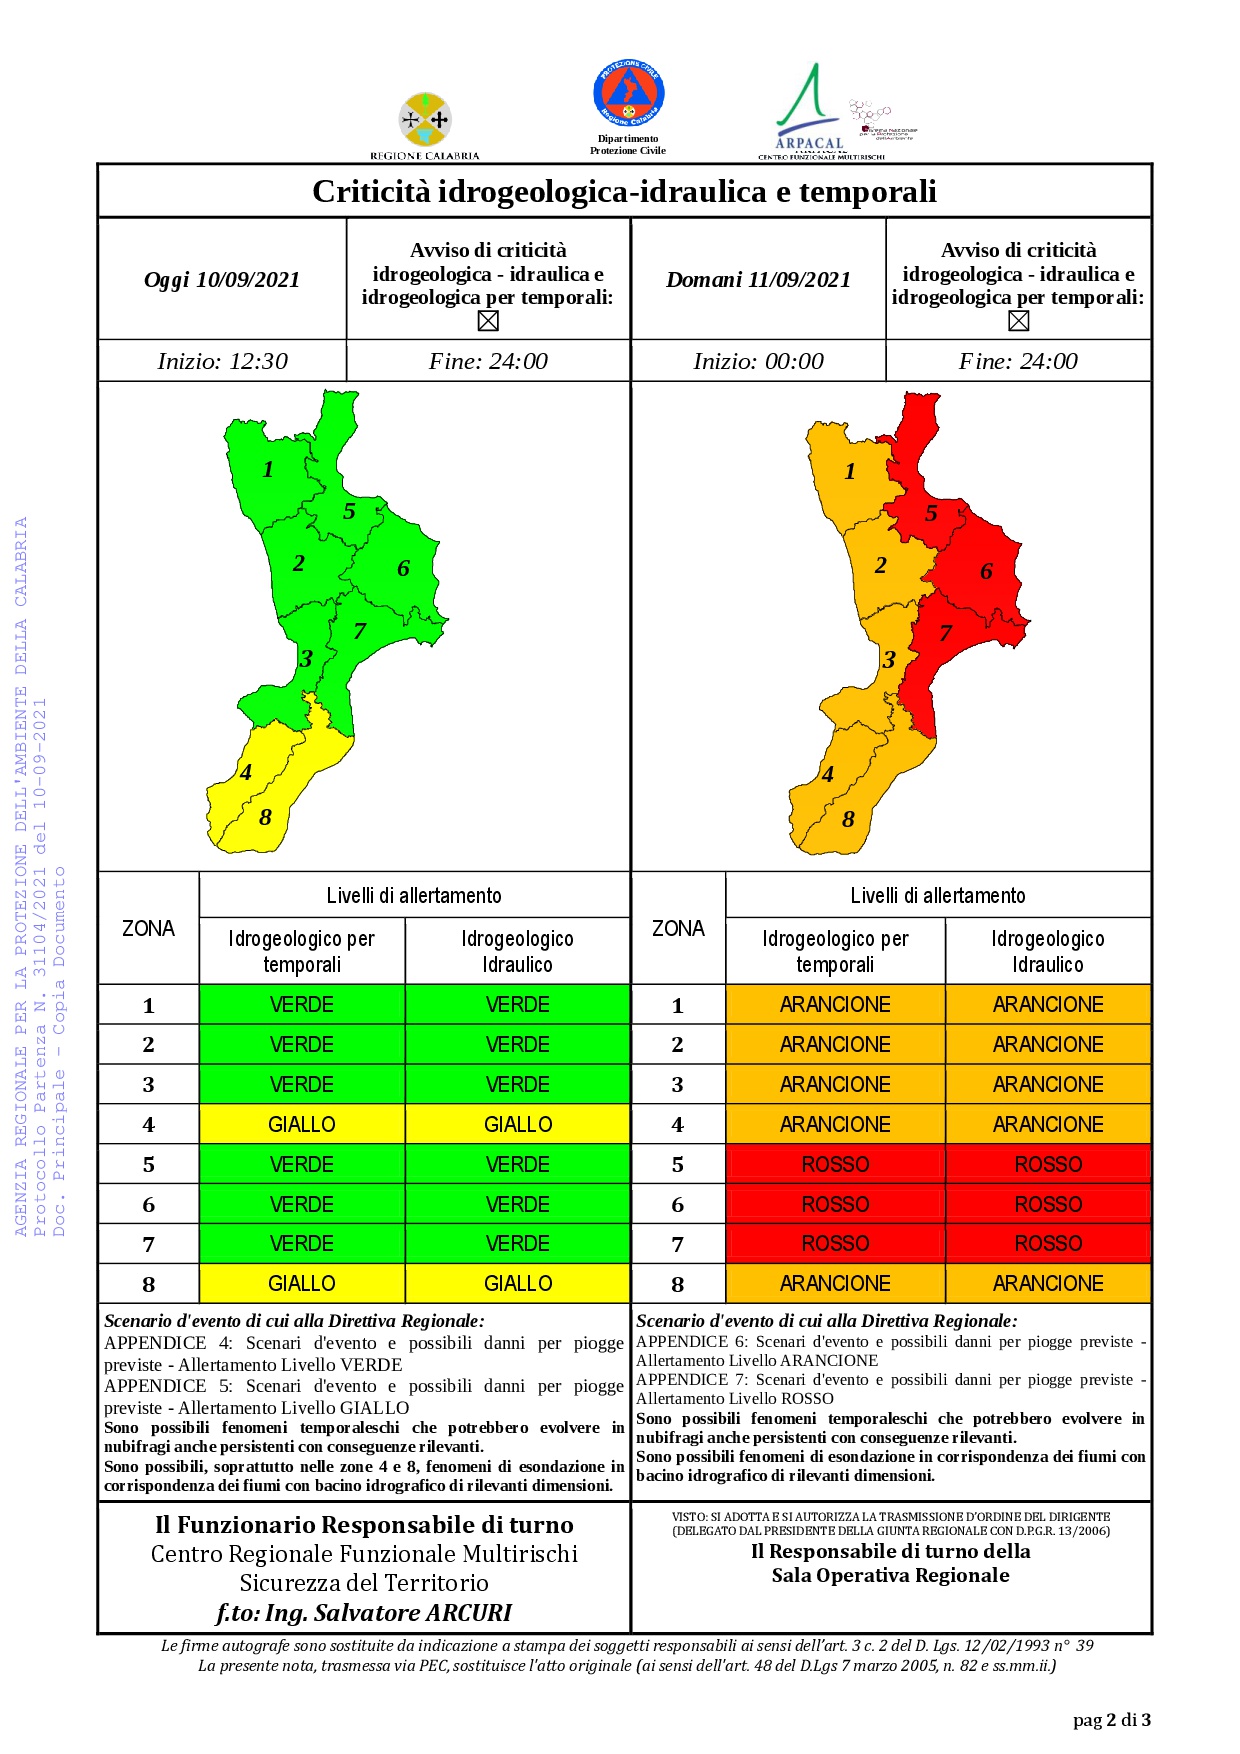 Criticità idrogeologica-idraulica e temporali in Calabria 10-09-2021